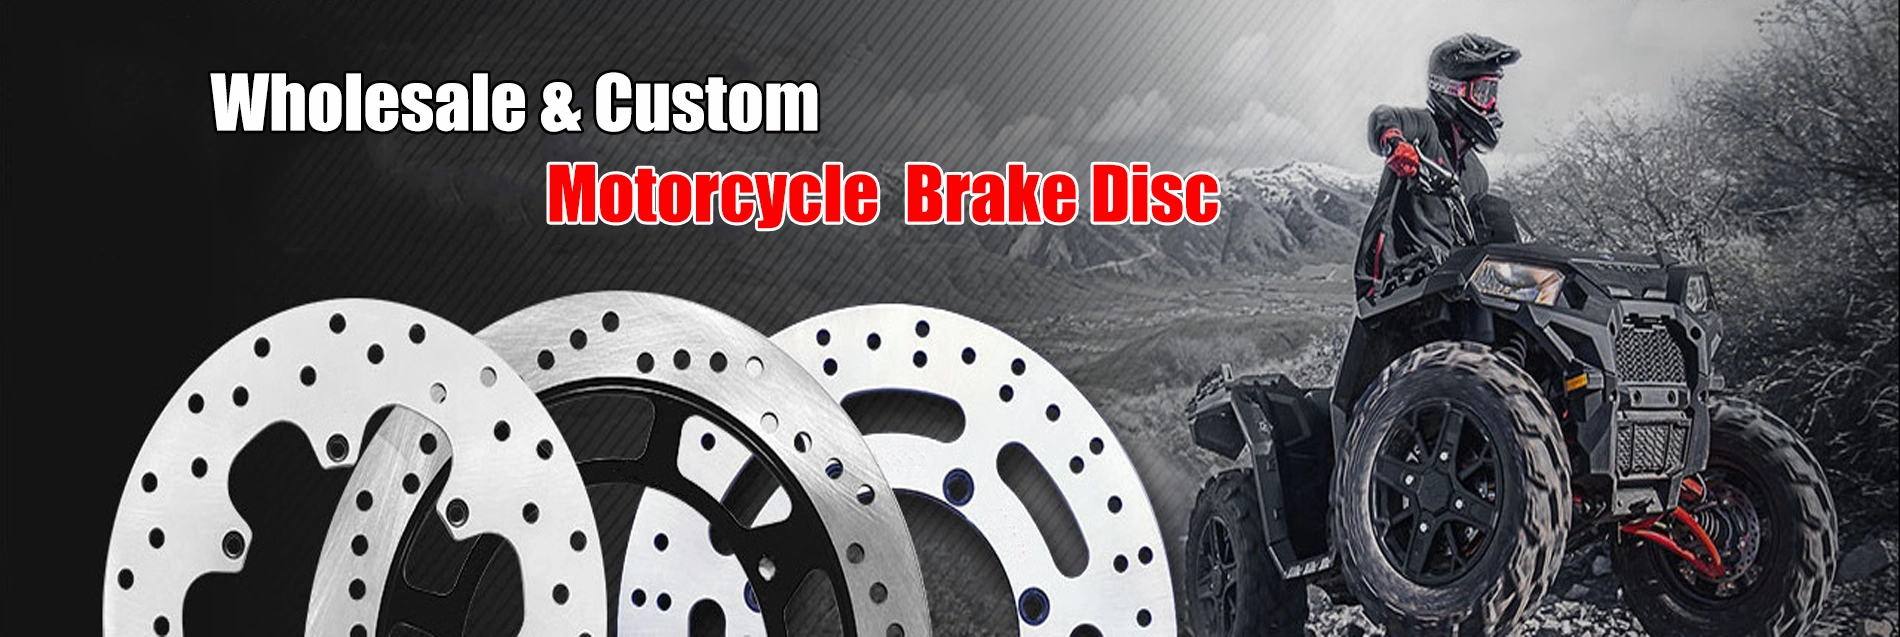 Custom rear 220mm motorcycle brake disc for Honda road bike